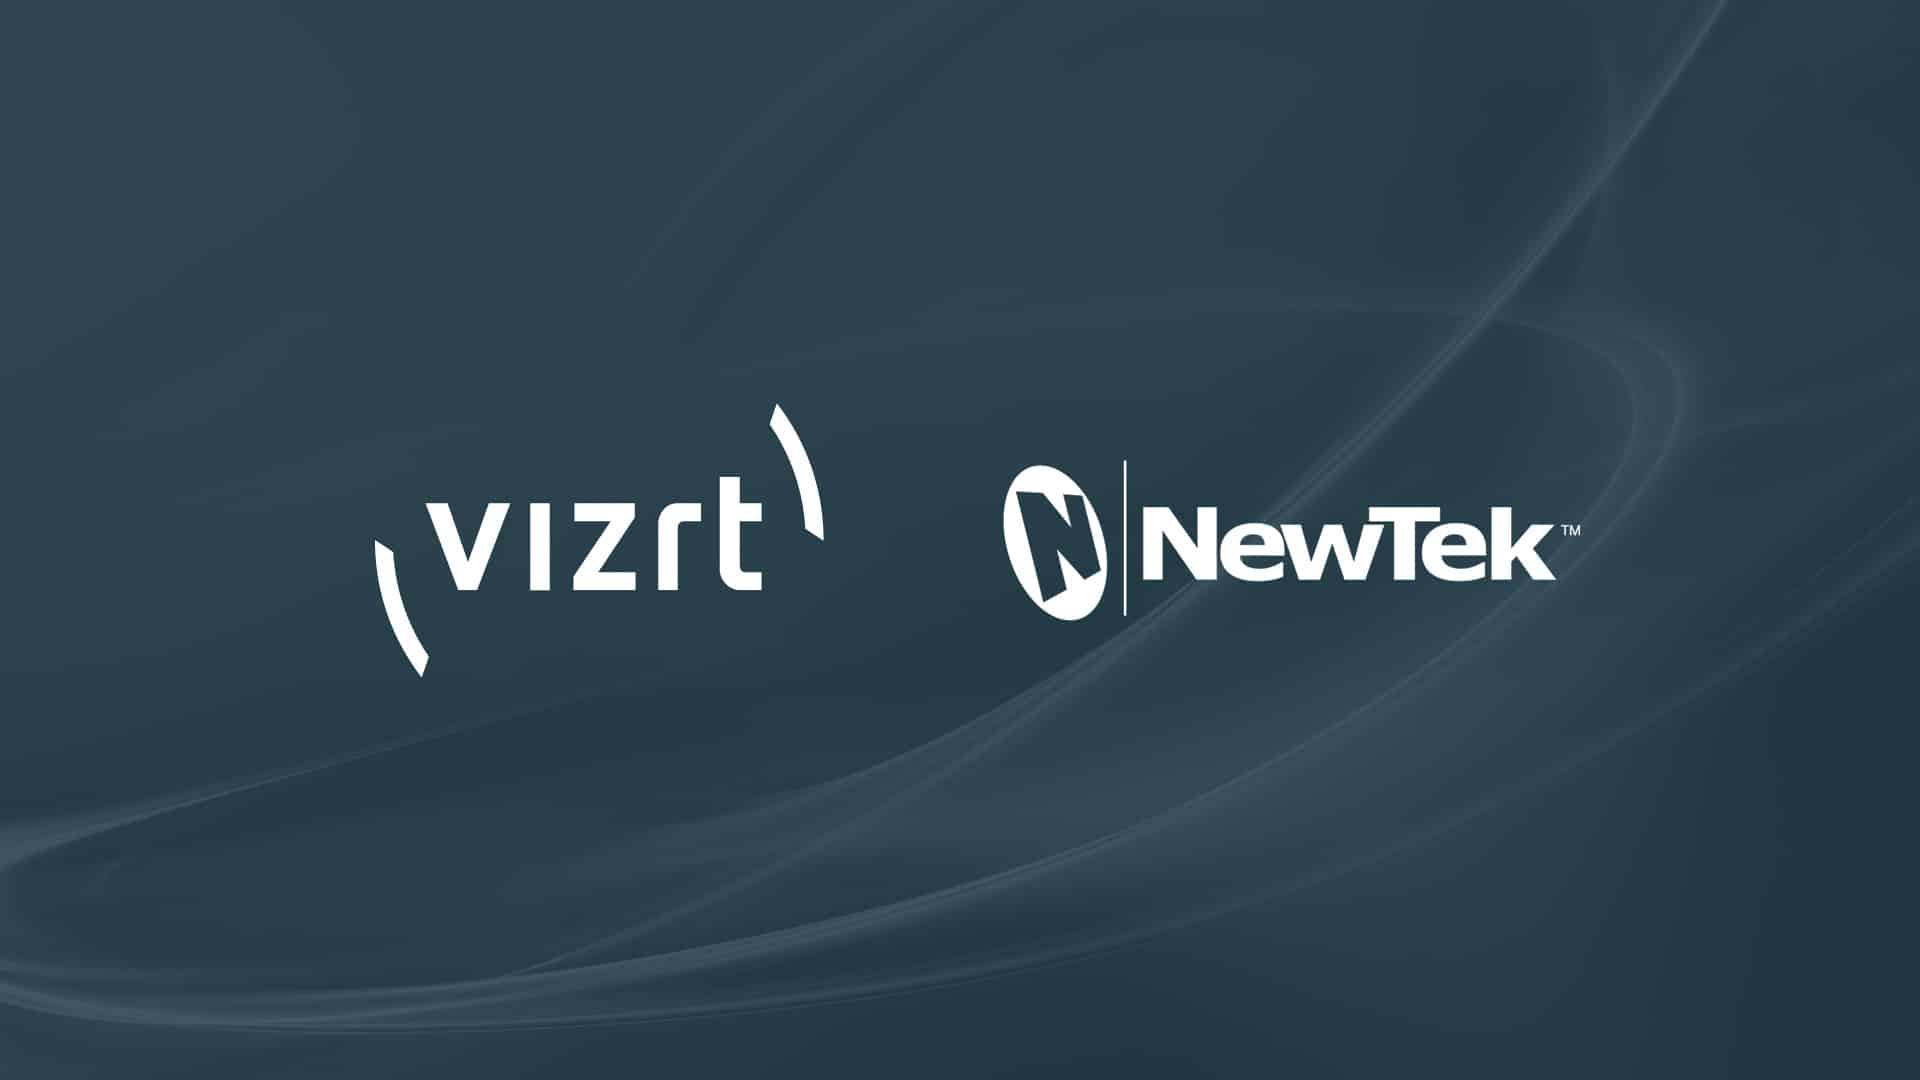 Vizrt and Newtek logo